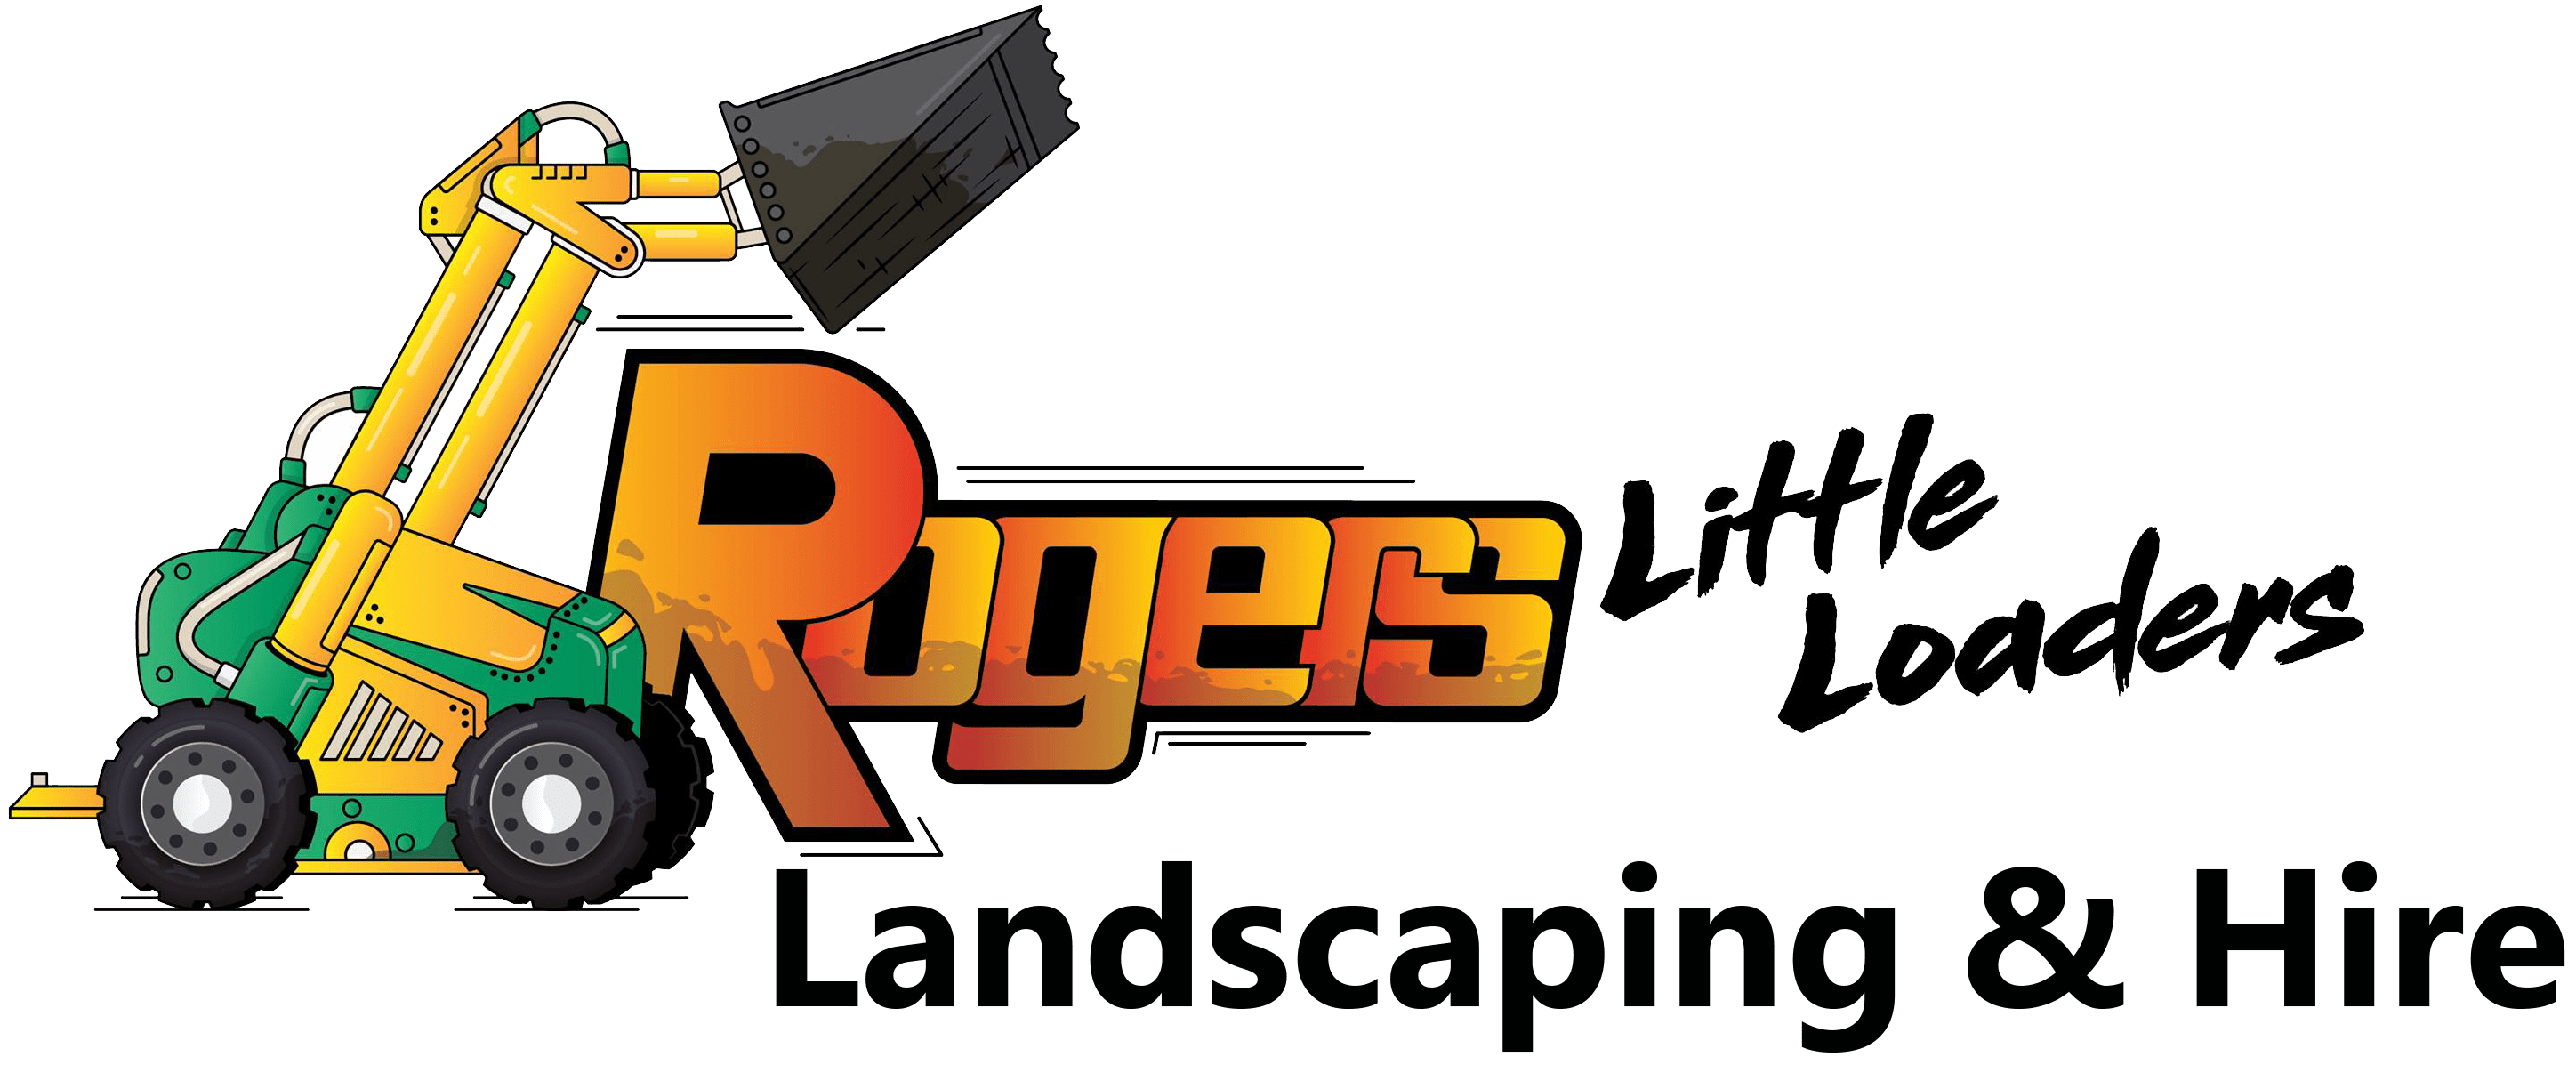 cropped Rogers Little Loaders Logo New Logo 09 11 2020